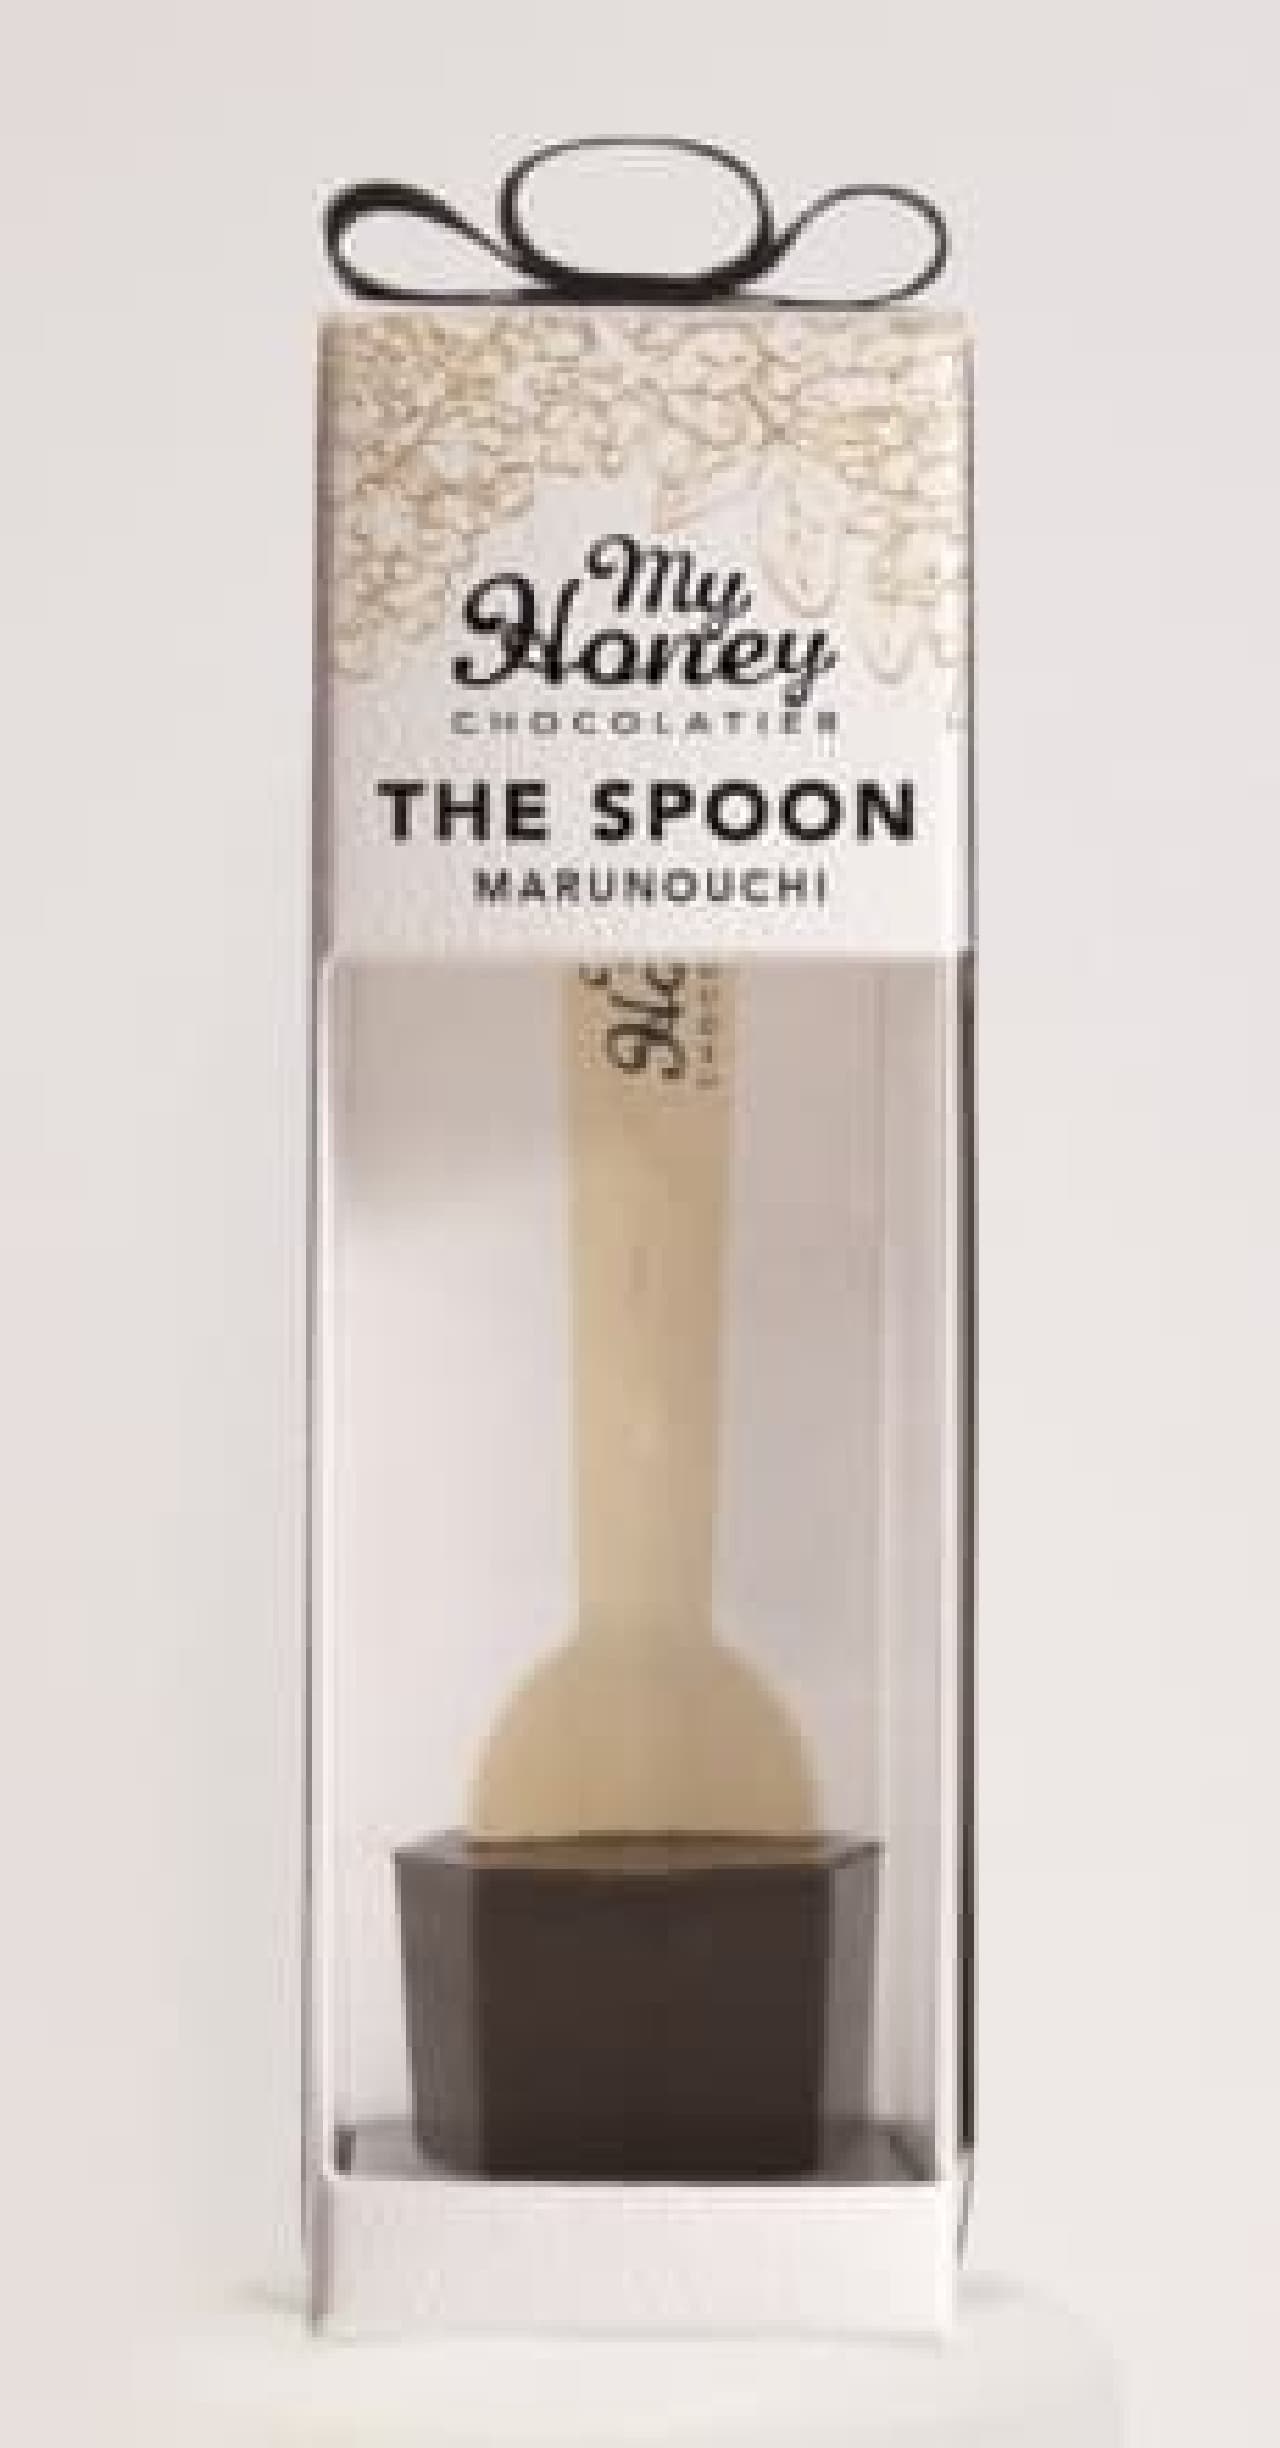 The Spoon MARUNOUCHI